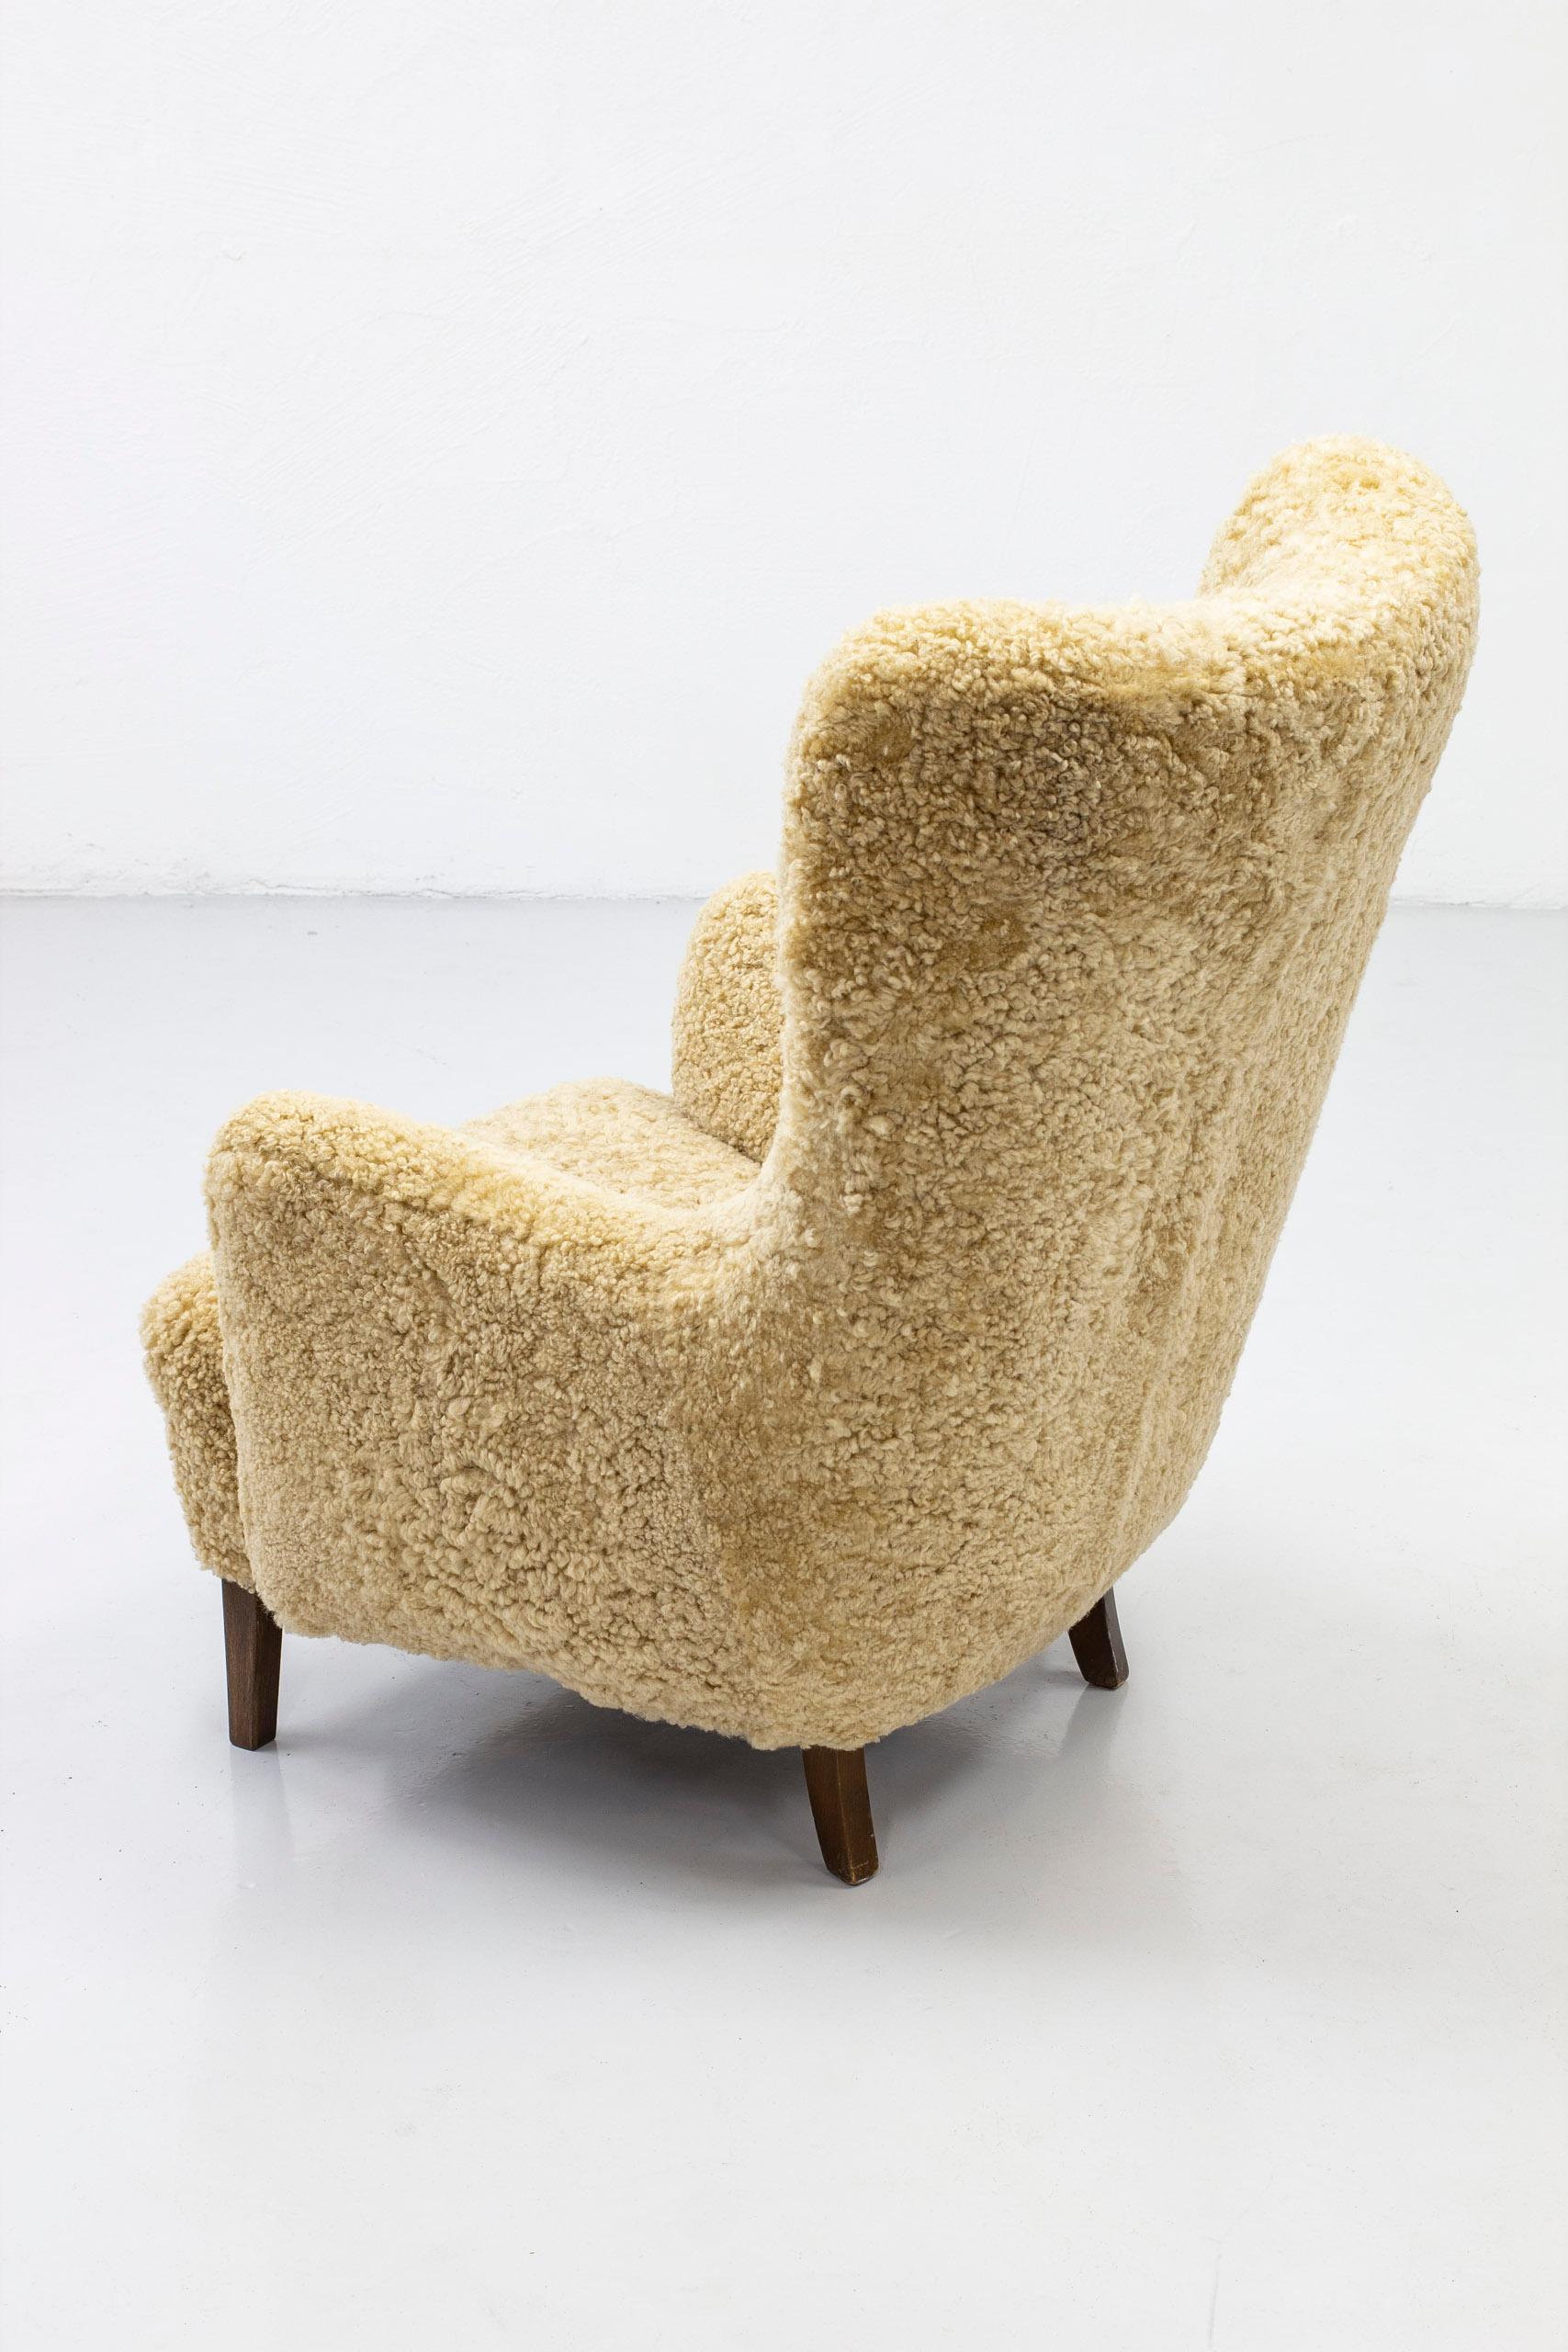 Scandinavian Modern Danish Modern High Back Chair with Sheepskin Upholstery, Denmark, 1950s